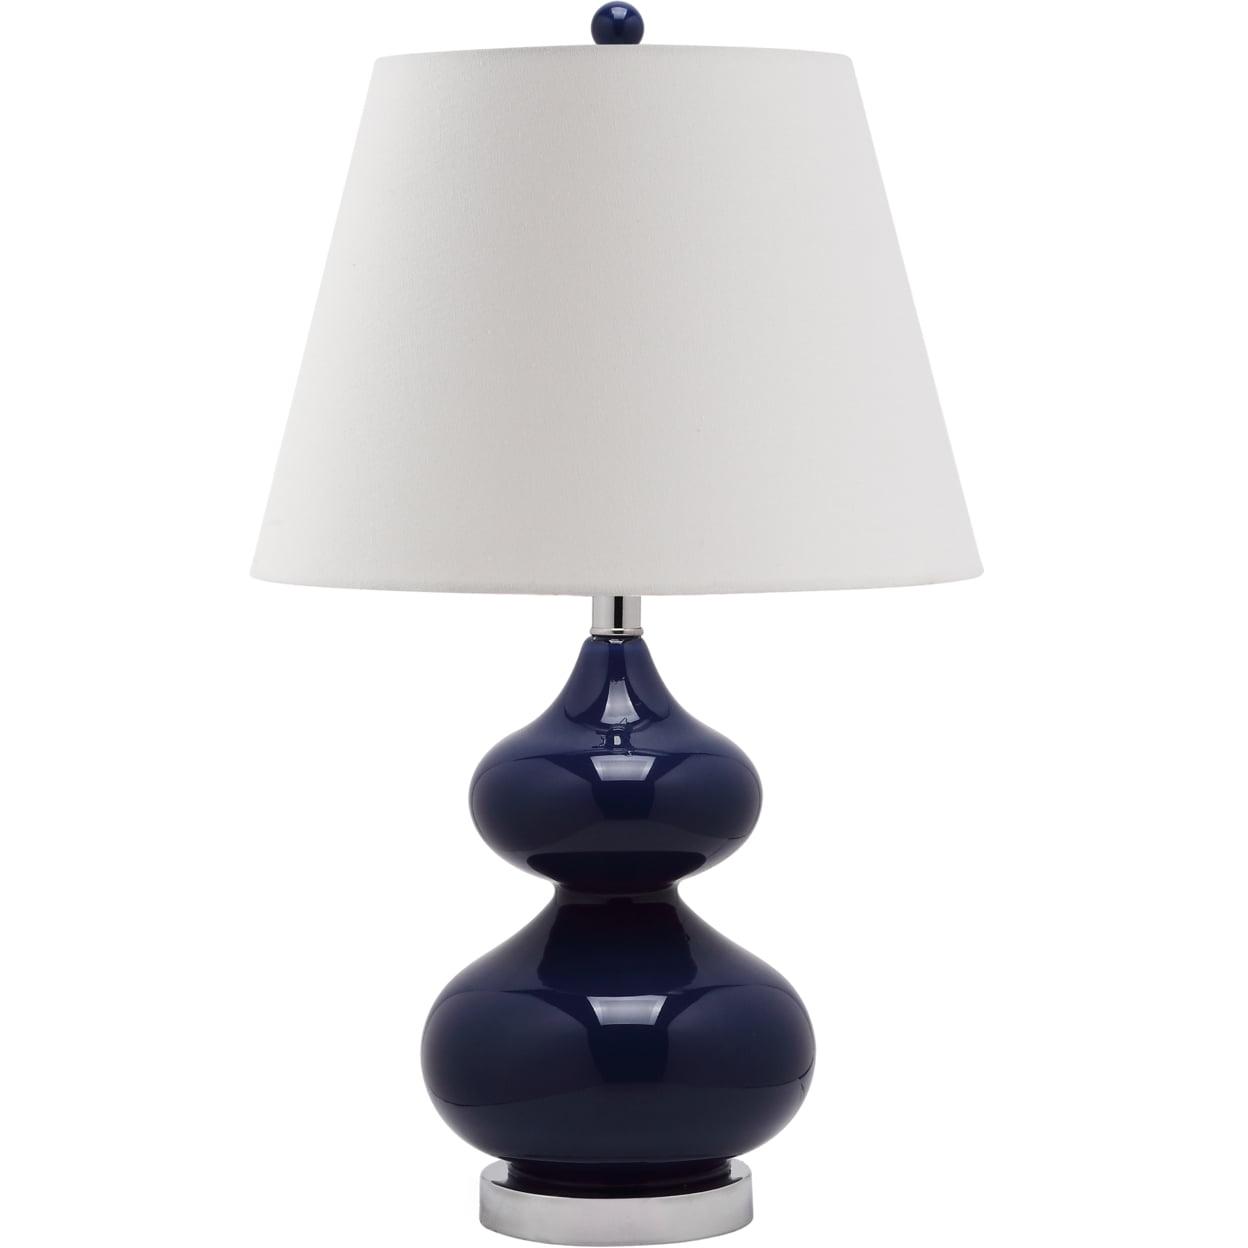 Elegant Art Deco Inspired 31" Black Crystal Globe Table Lamp